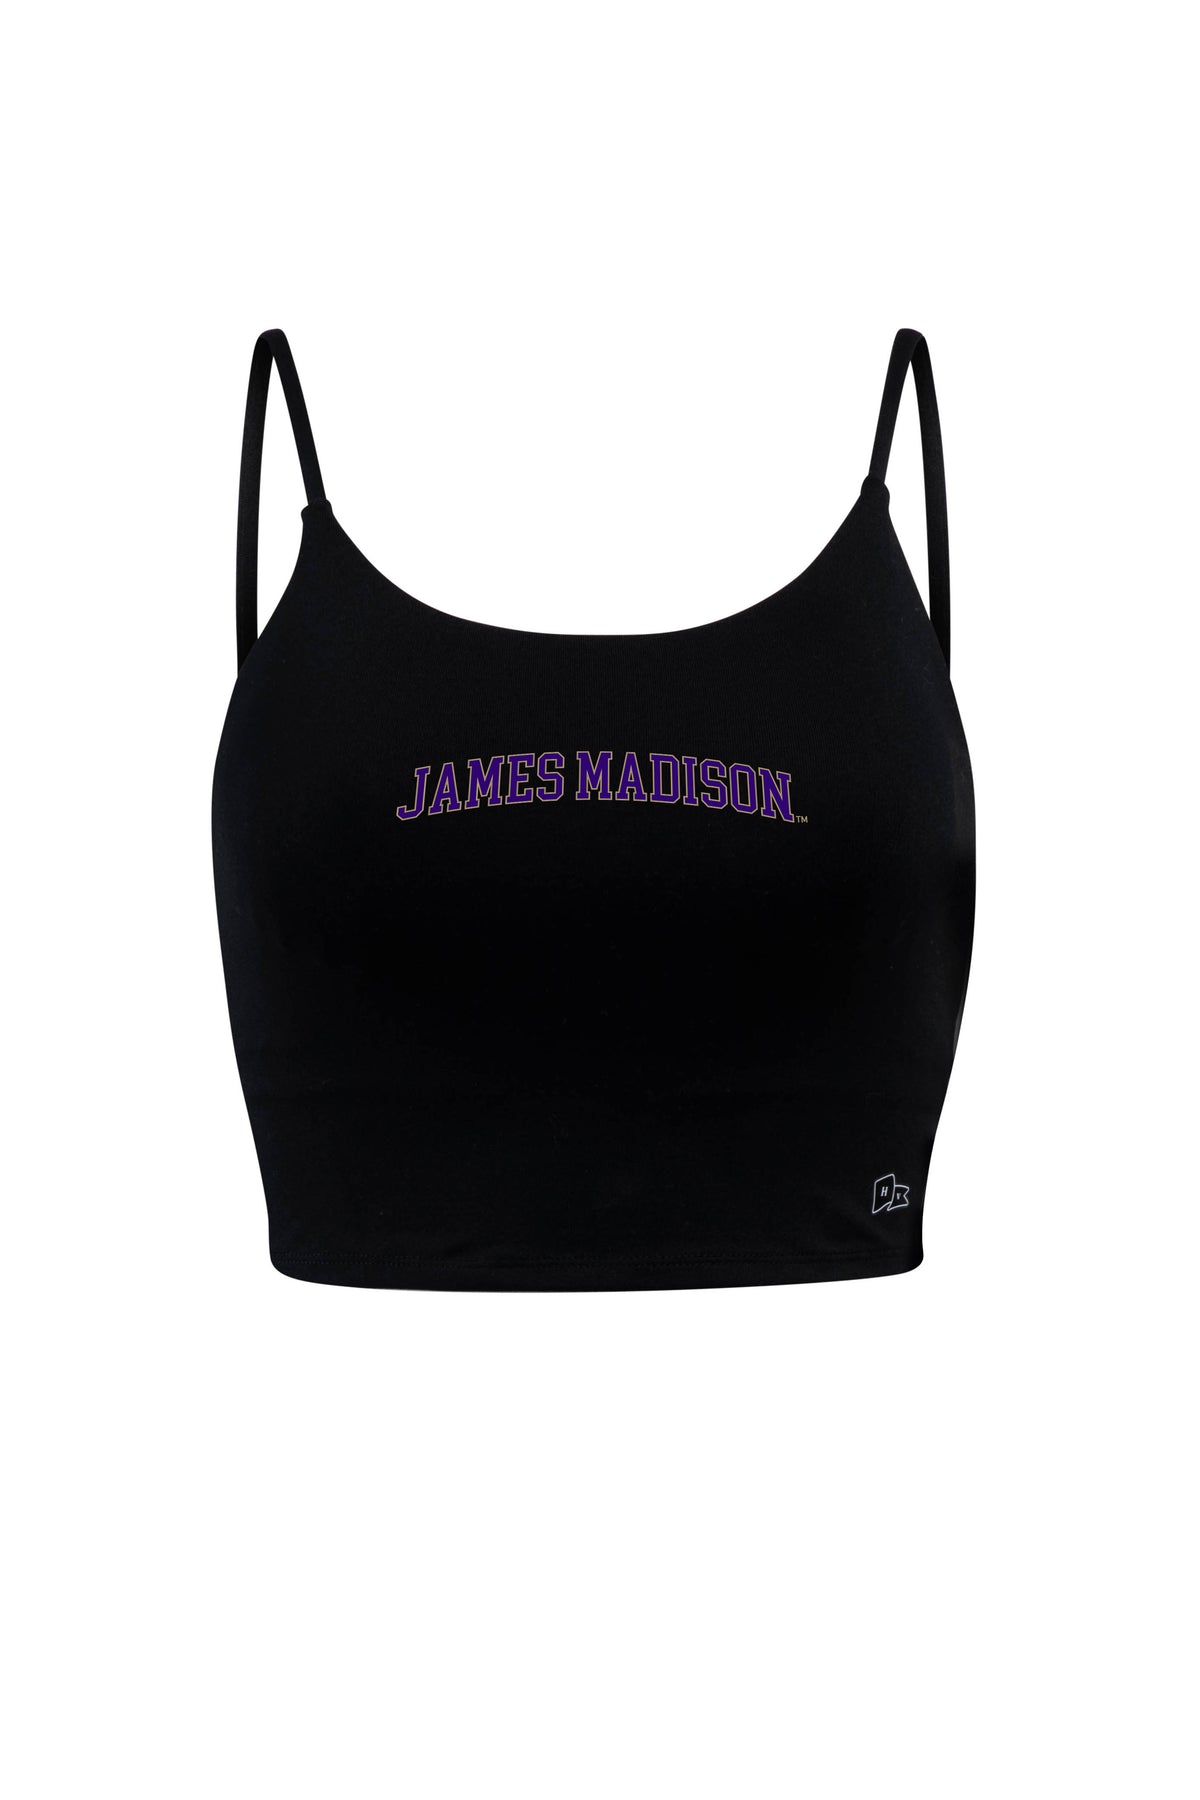 James Madison University Bra Tank Top